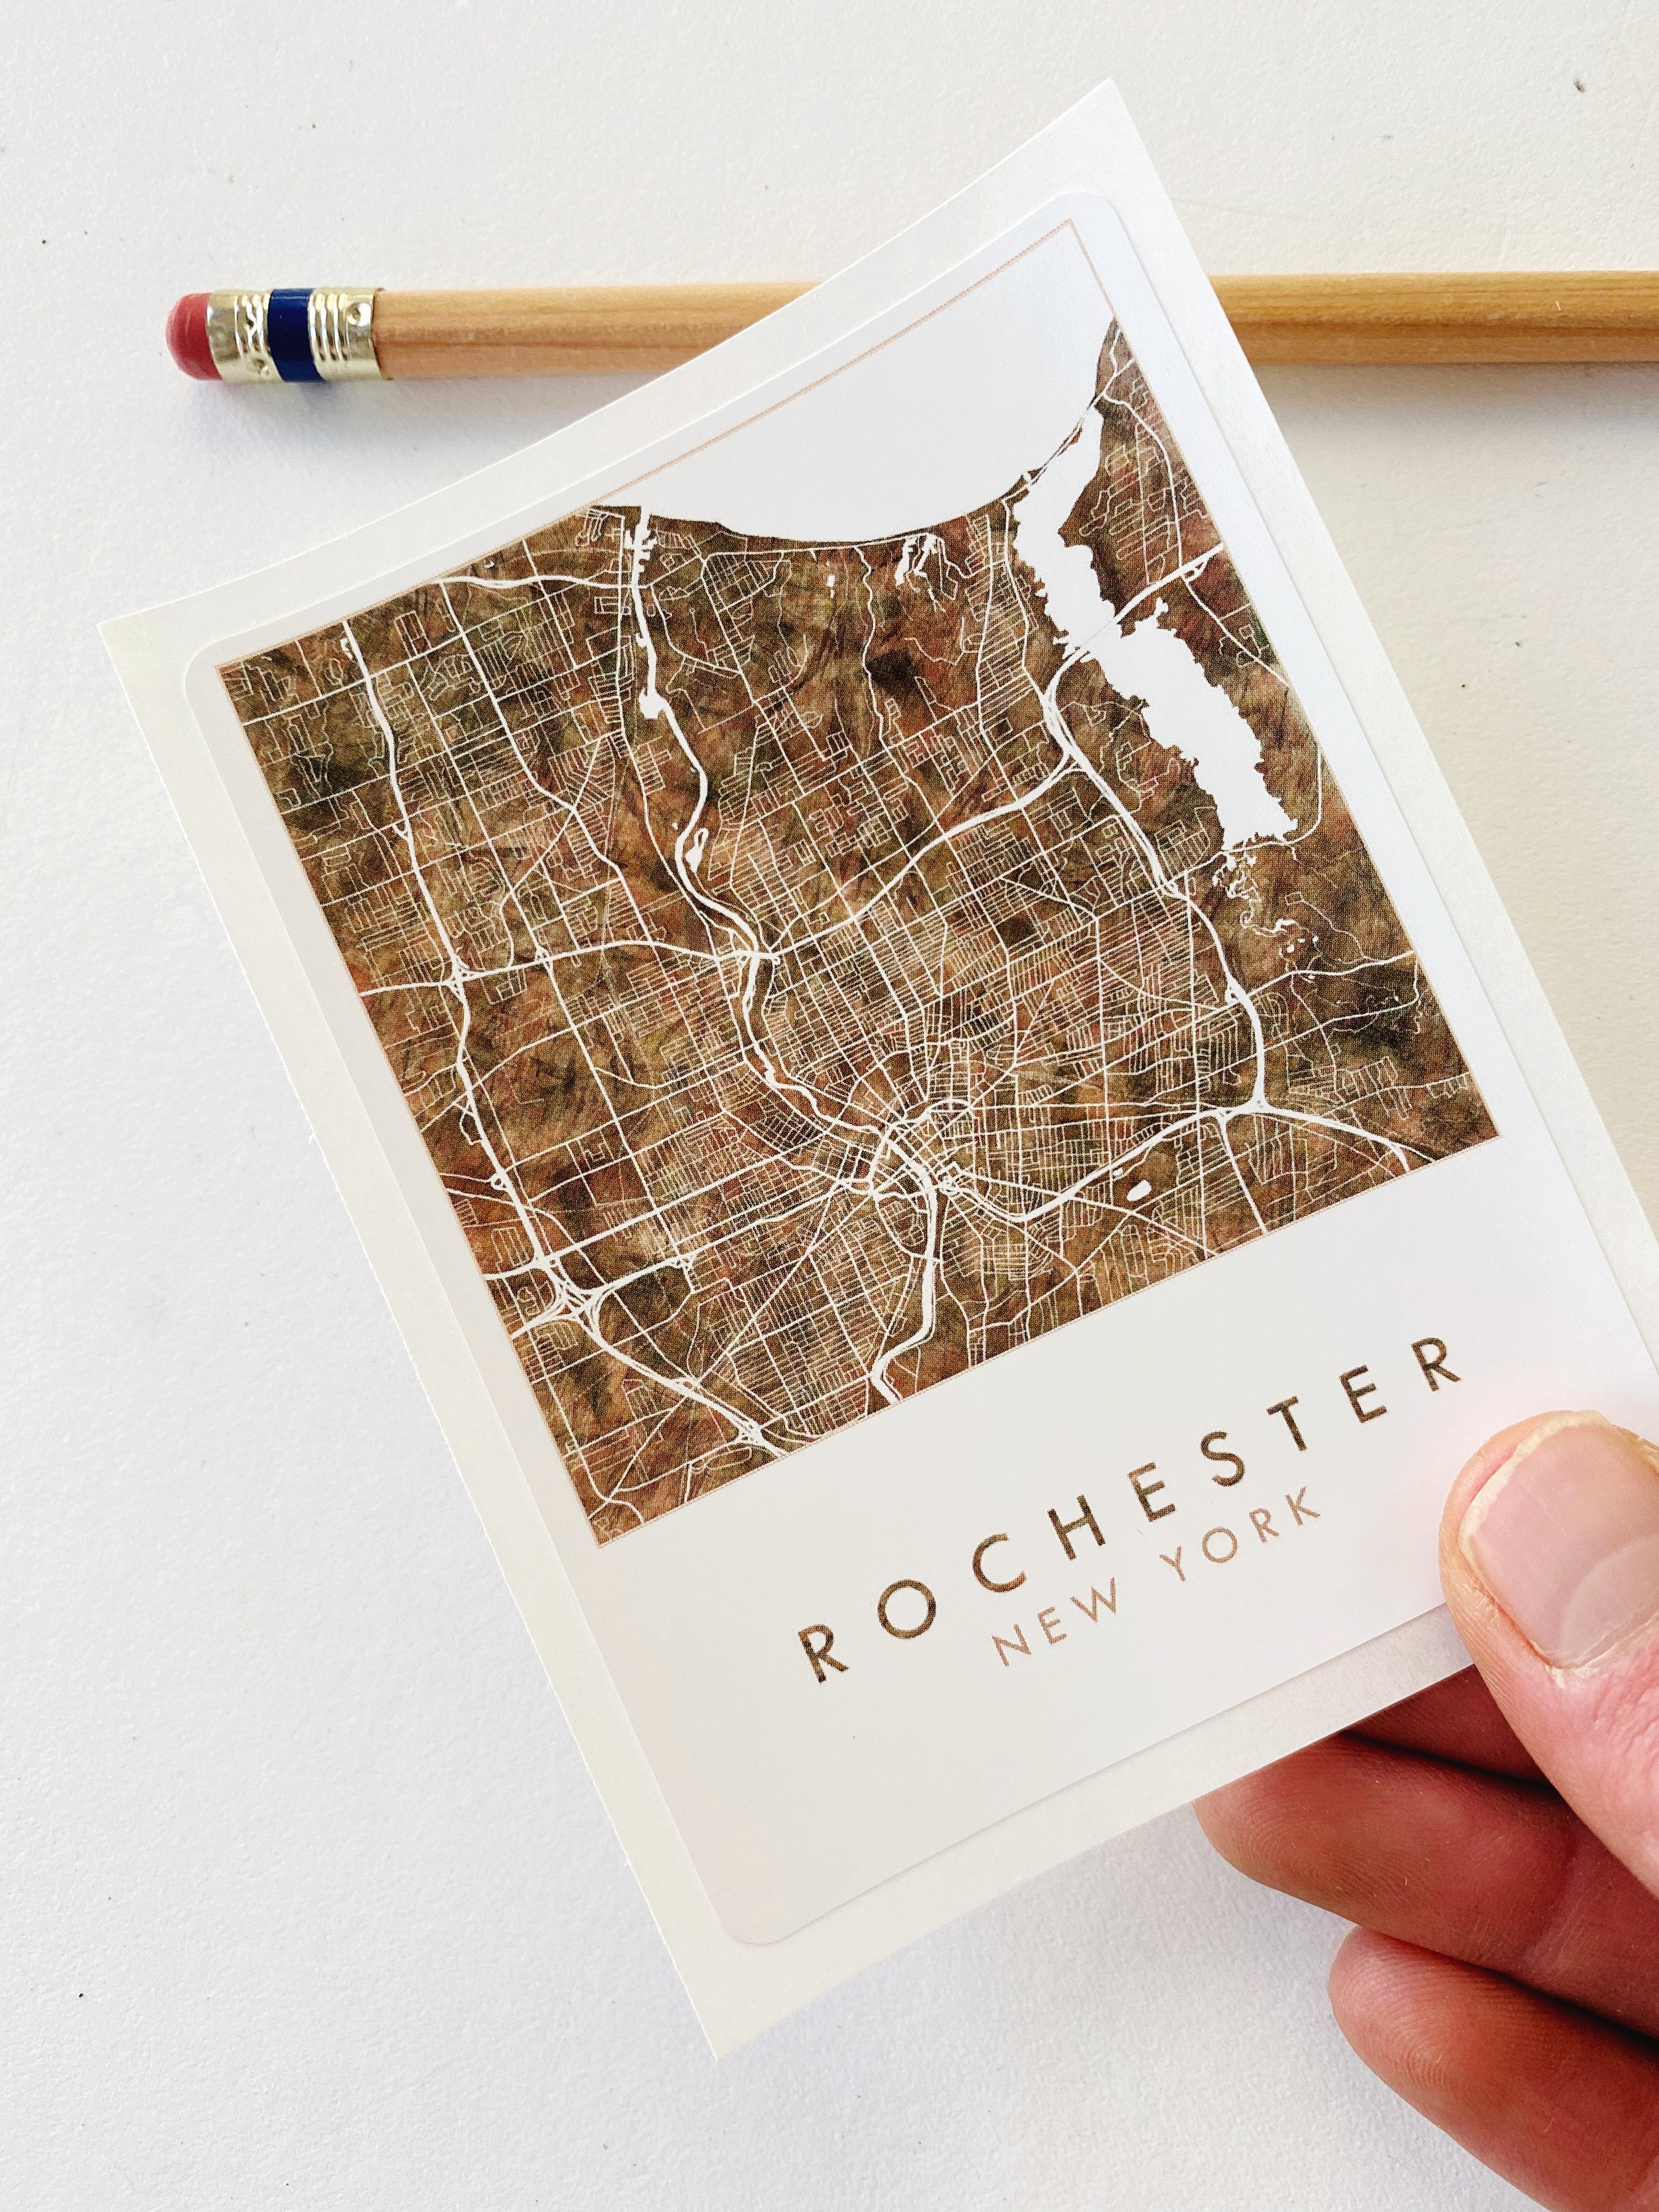 ROCHESTER New York Map Sticker